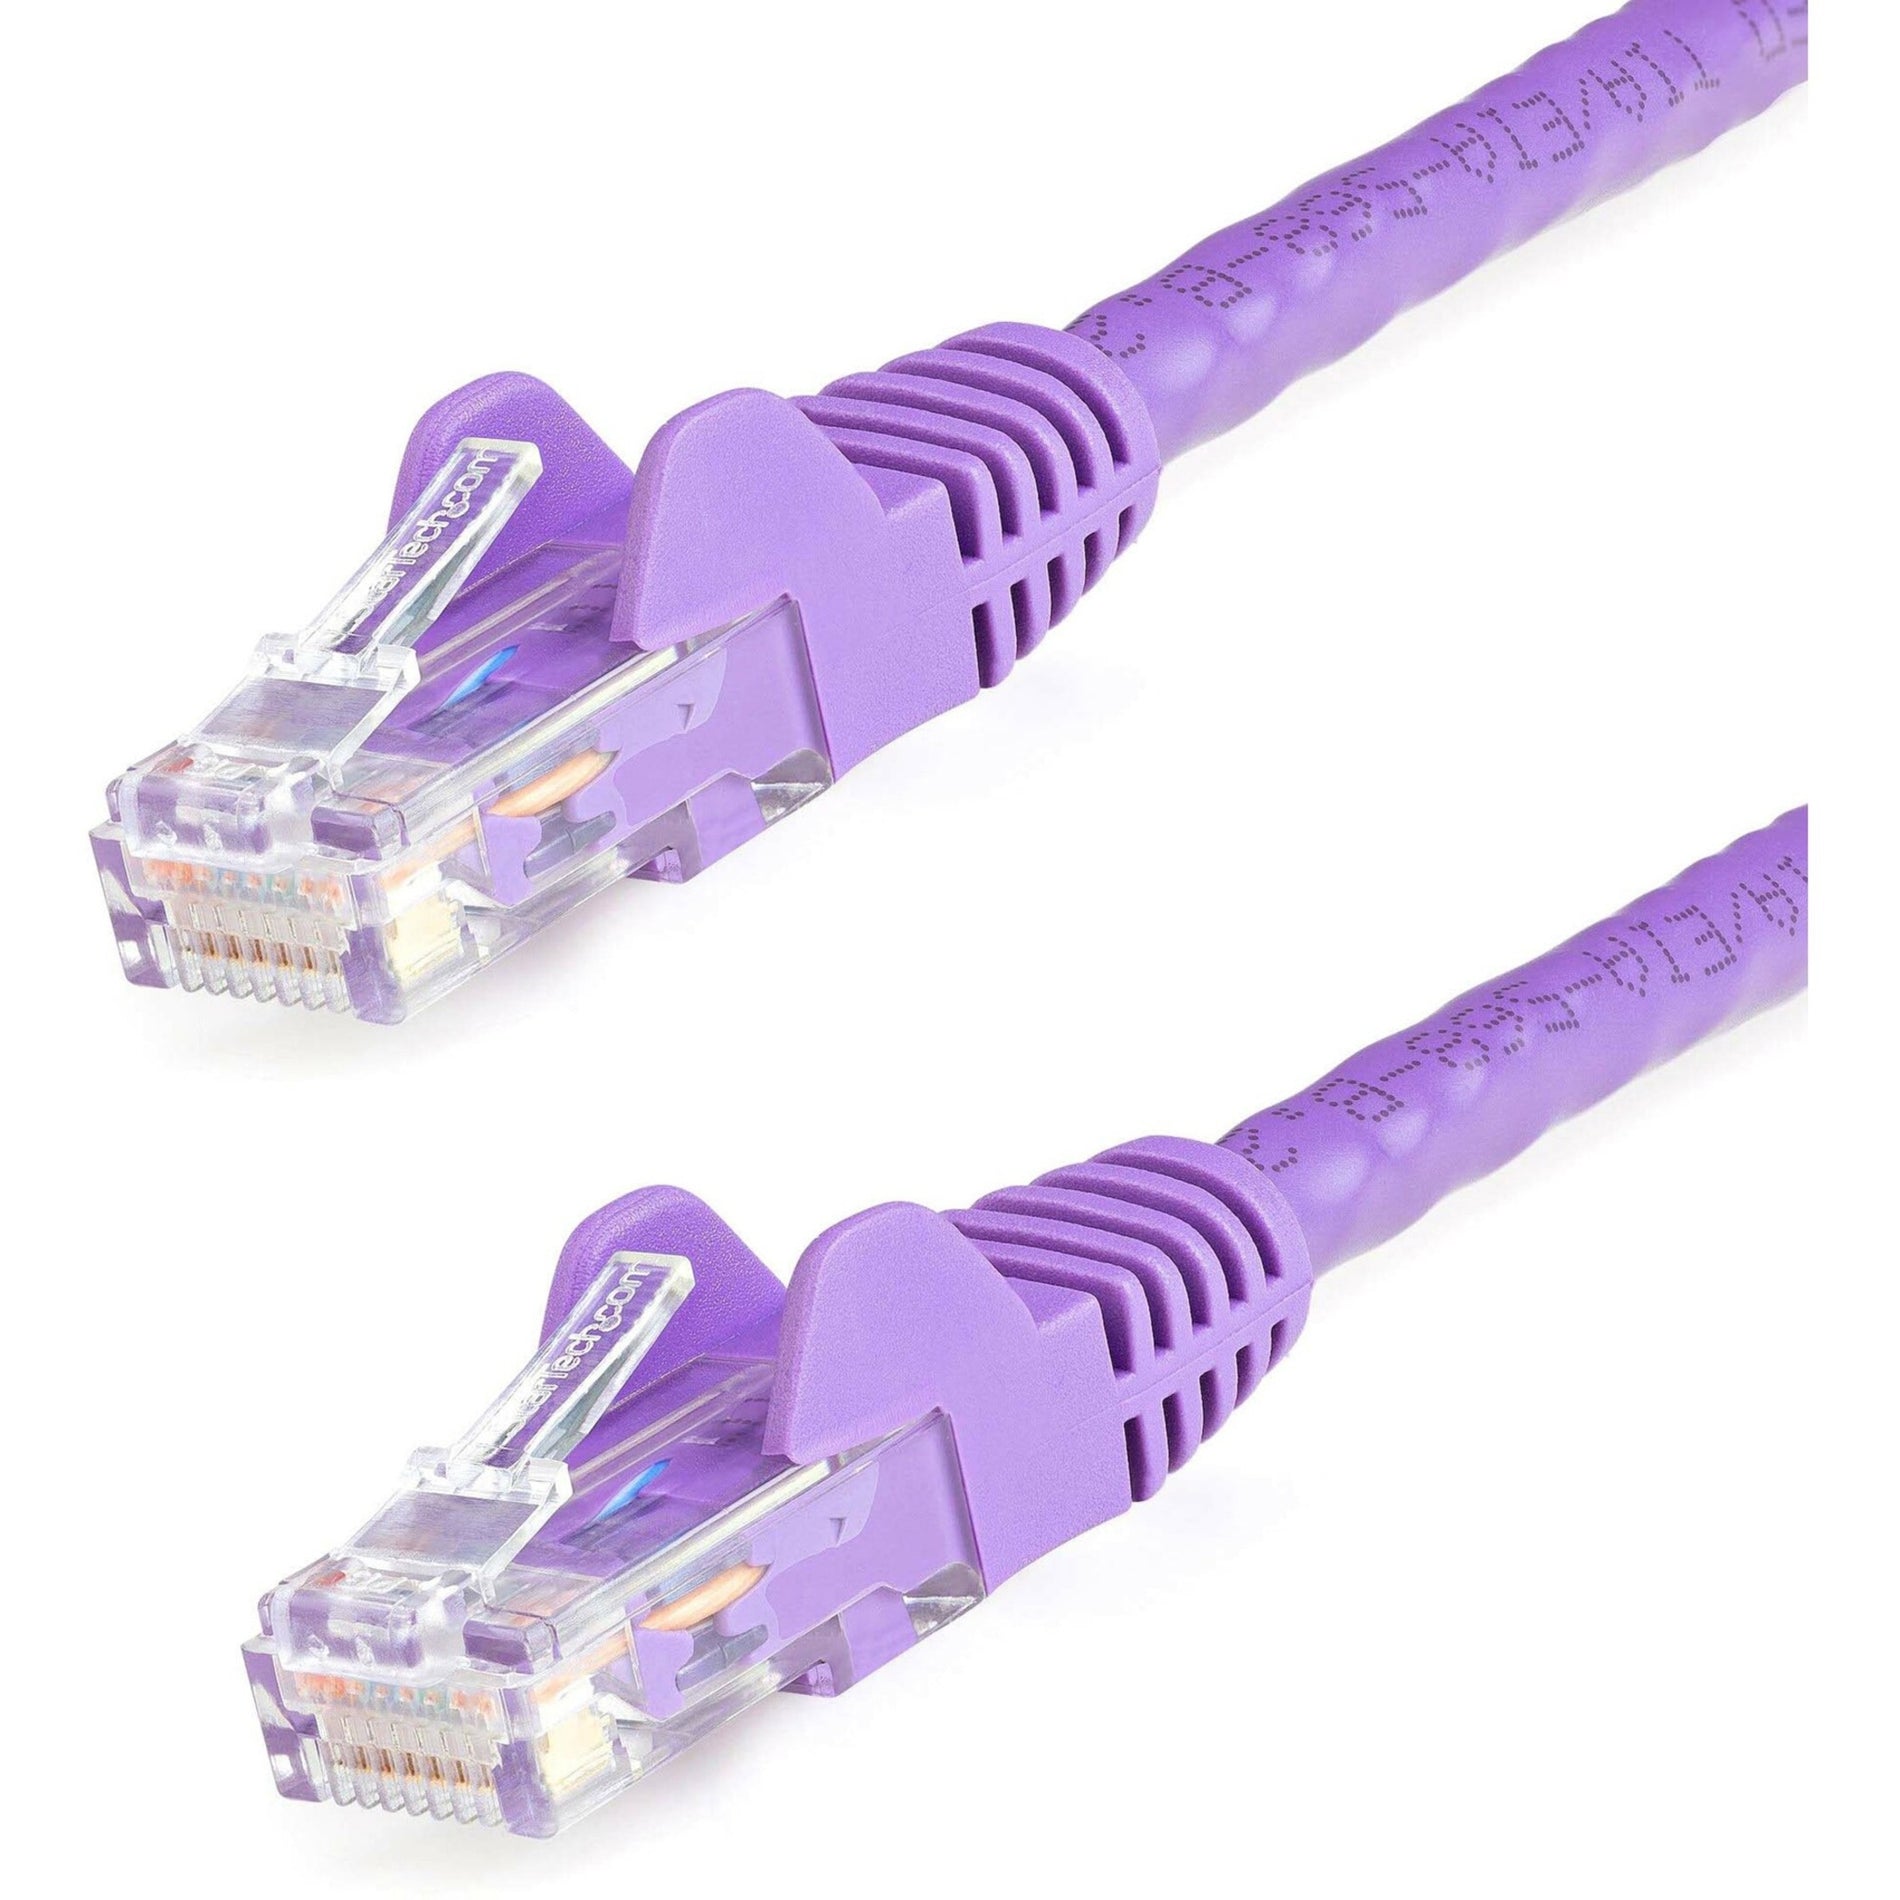 StarTech.com N6PATCH6INPL Cat6 Patch Cable, 6in Purple Ethernet Cable, Snagless RJ45 Connectors